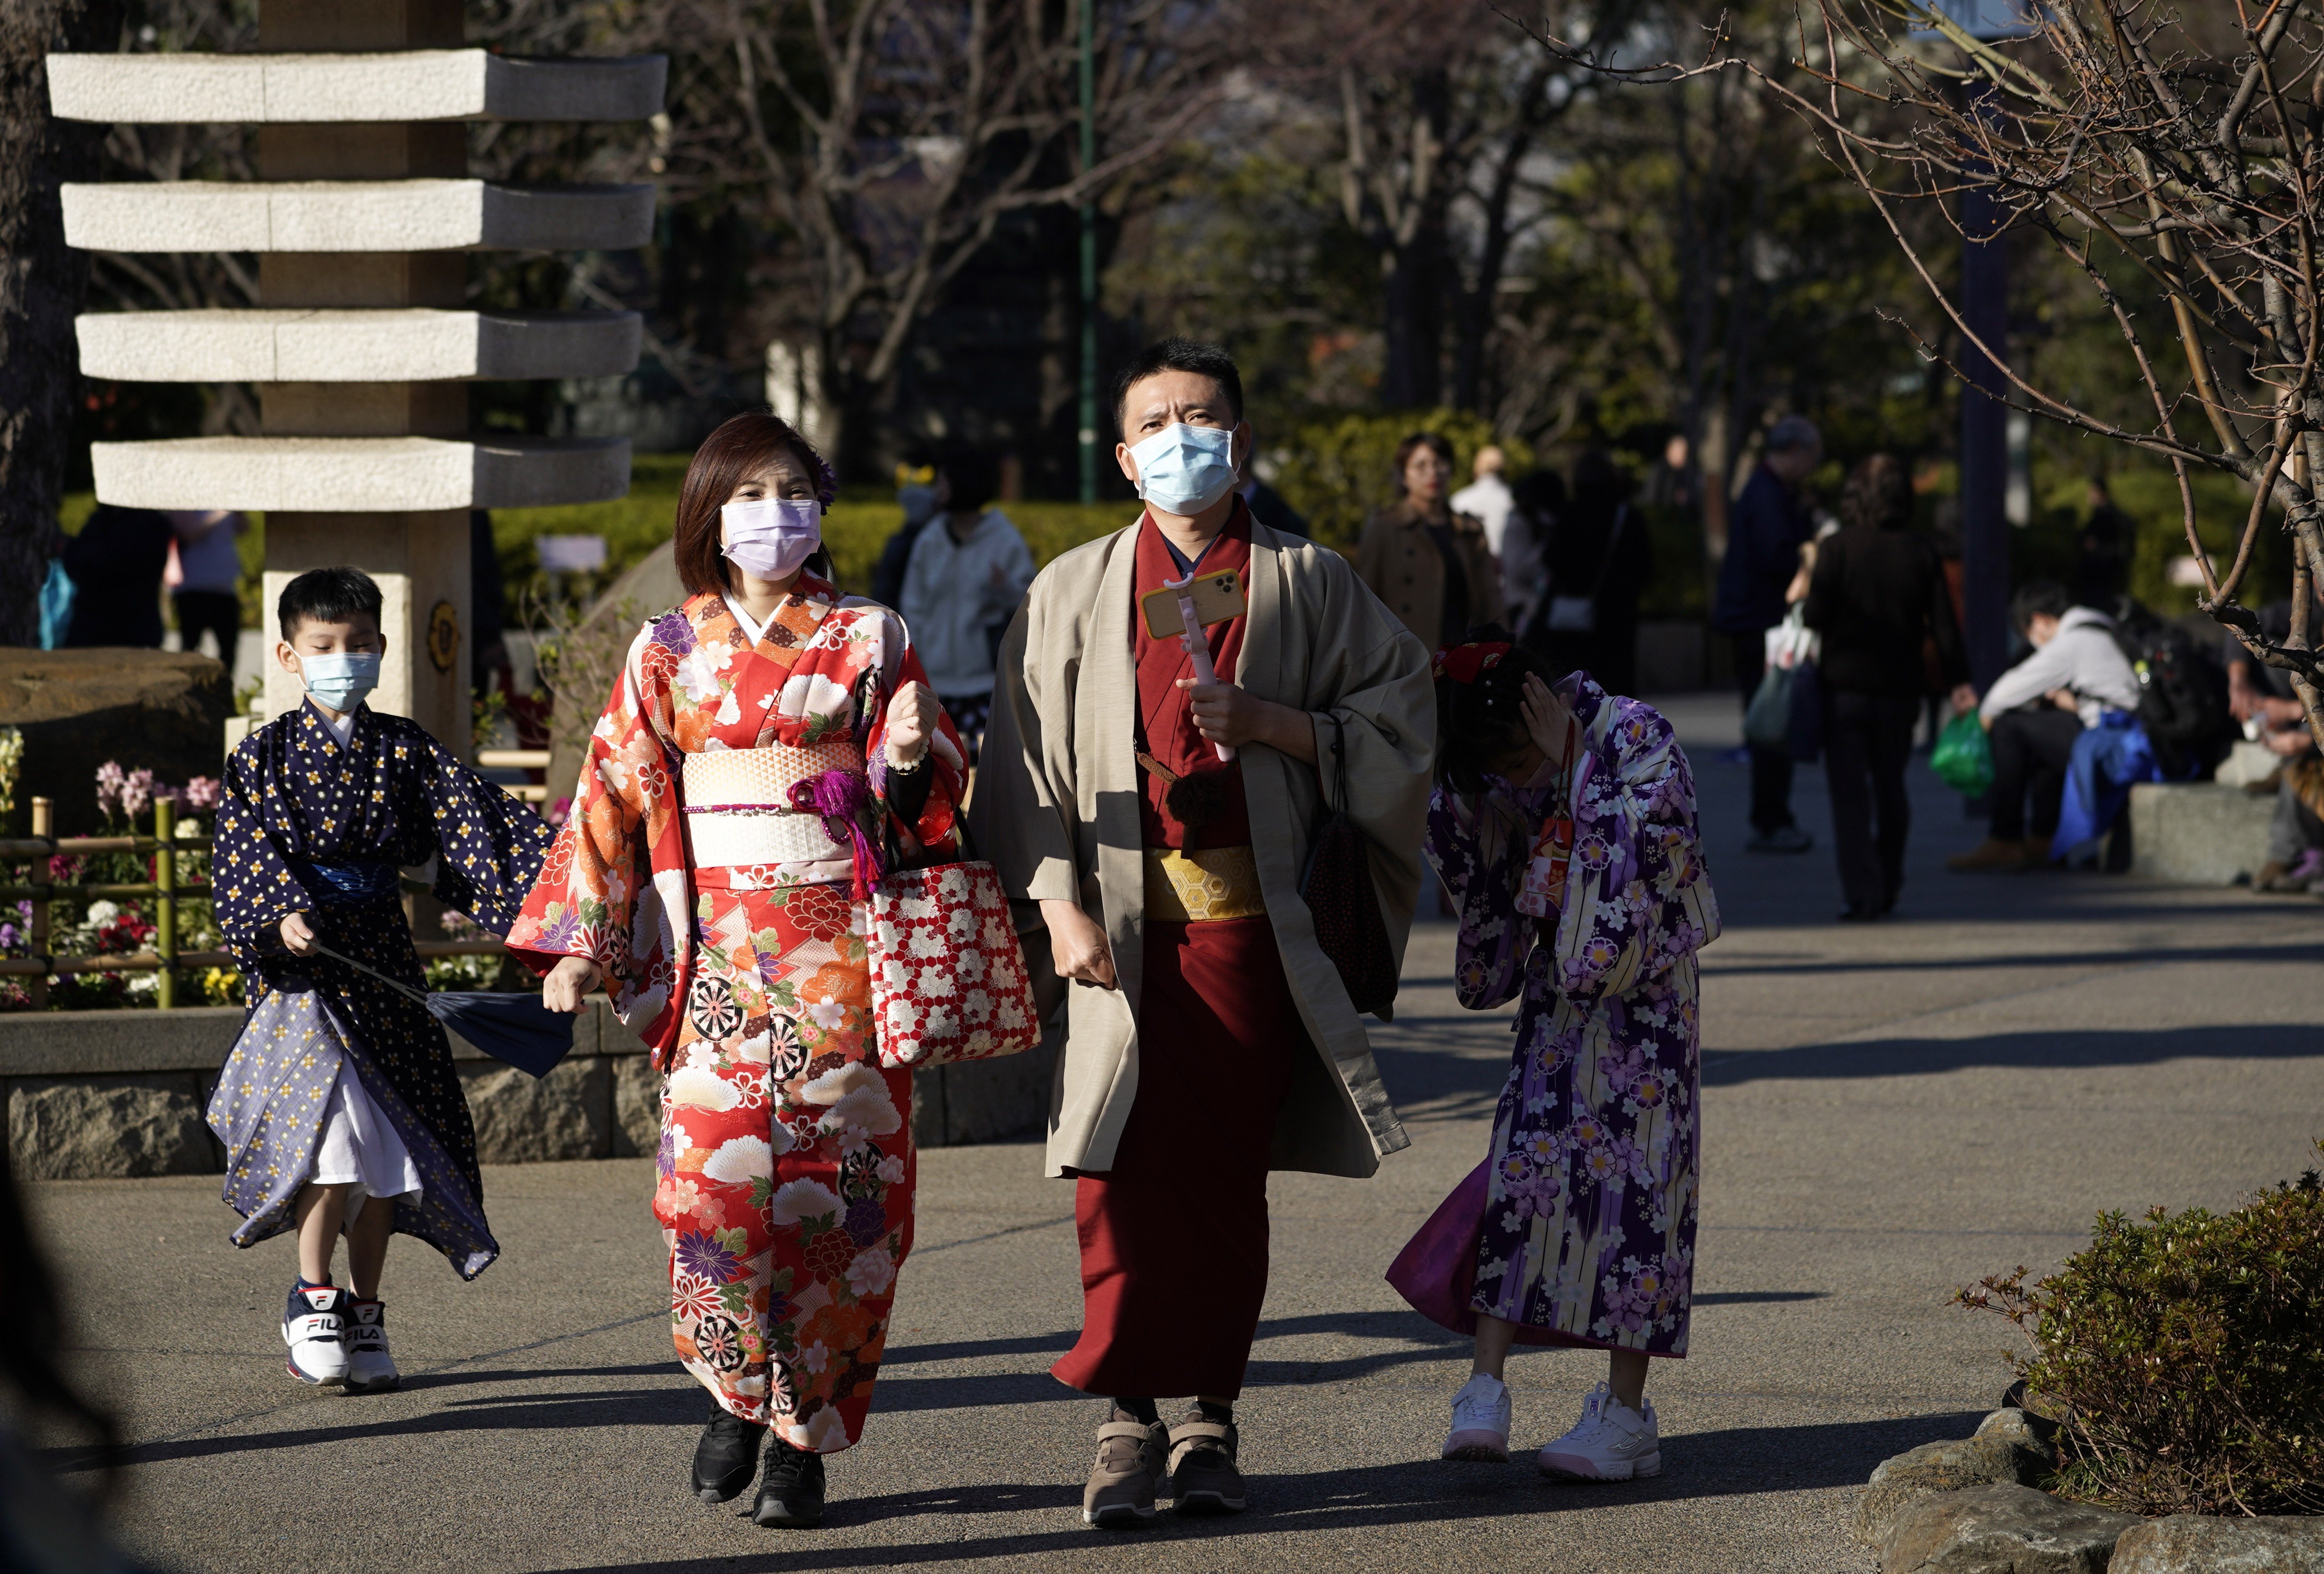 Tourists wearing masks visit the Sensoji temple in Tokyo, on January 30. Japan’s Prime Minister Shinzo Abe has said the Tokyo Olympic Games will go ahead despite novel coronavirus fears. Photo: EPA-EFE